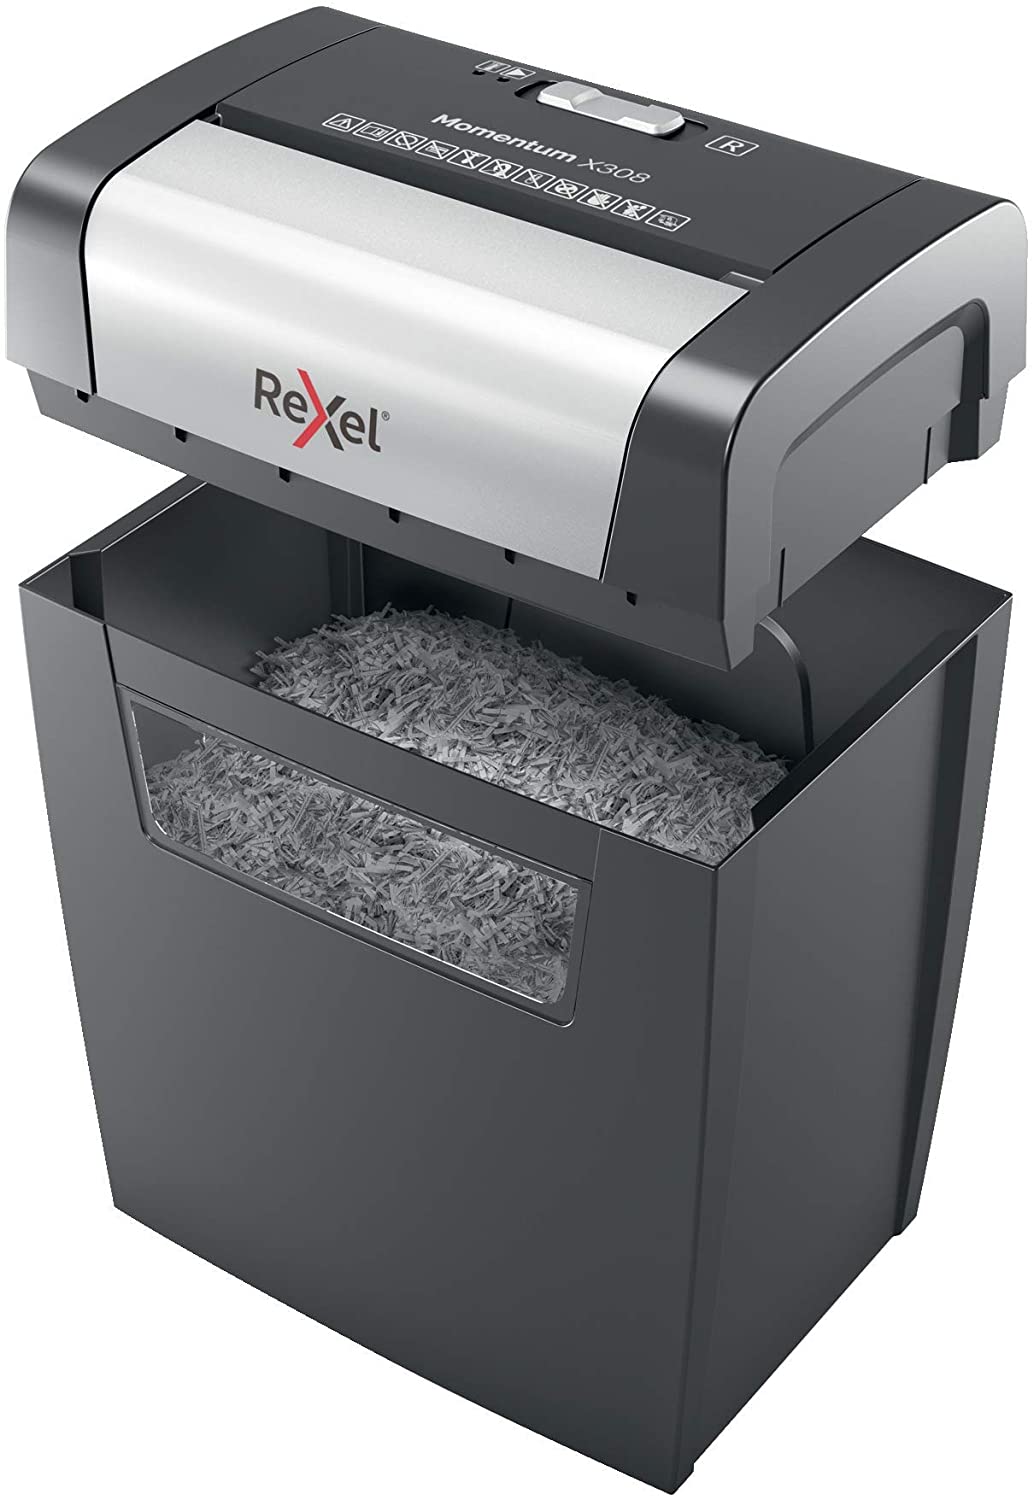 Rexel momentum x308 paper shredder review